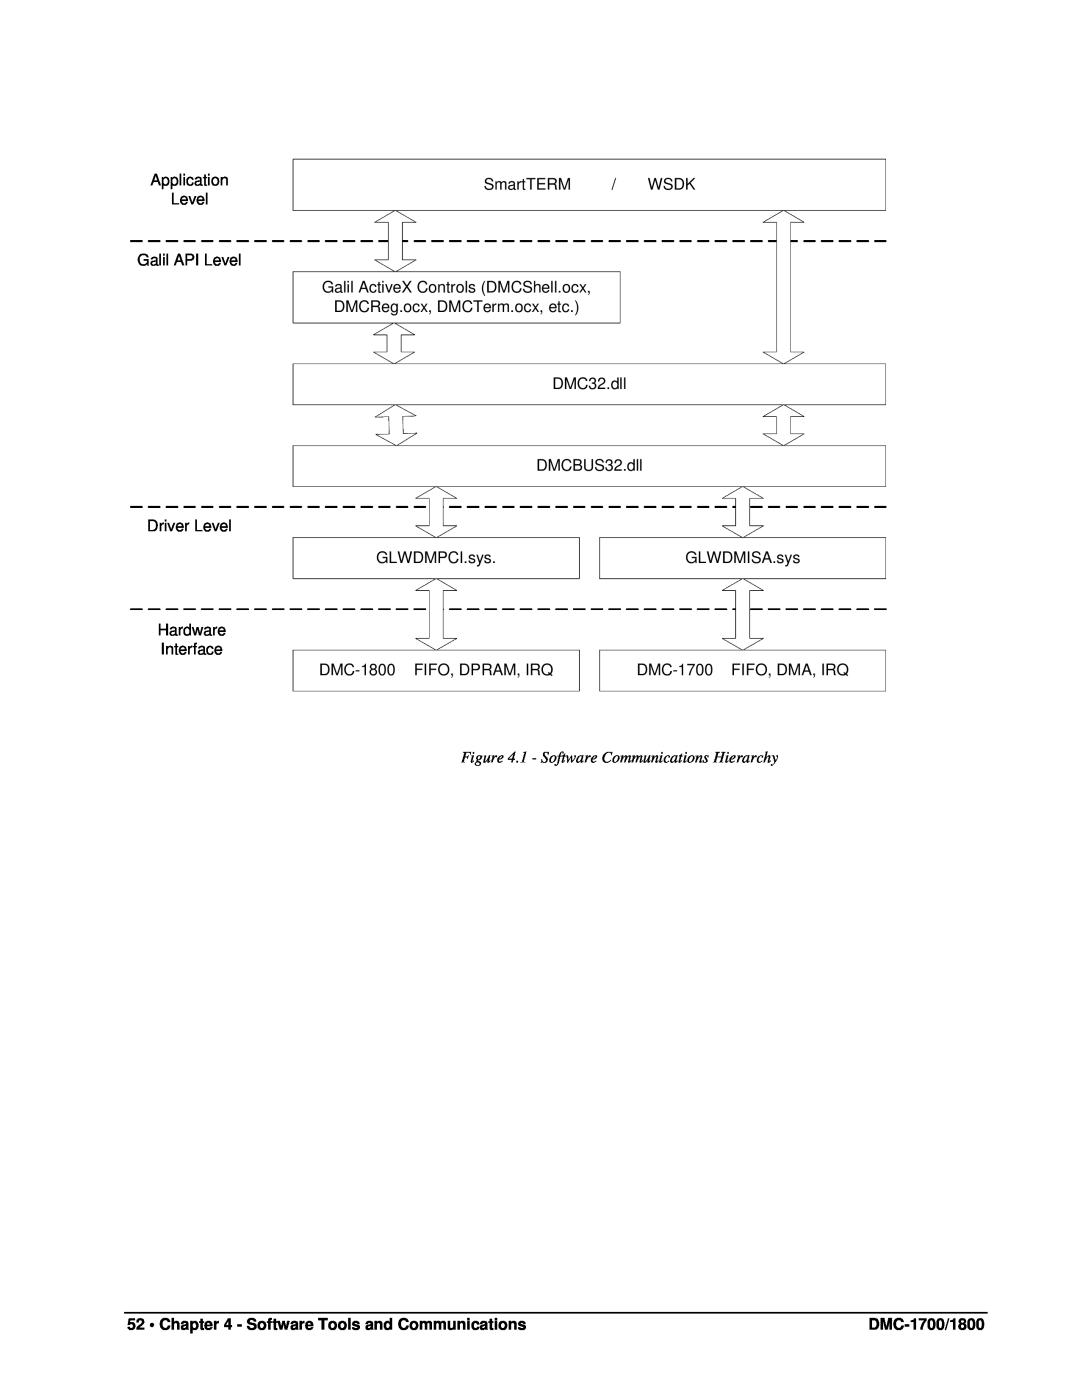 Galil DMC-1800, DMC-1700 user manual 1 - Software Communications Hierarchy 